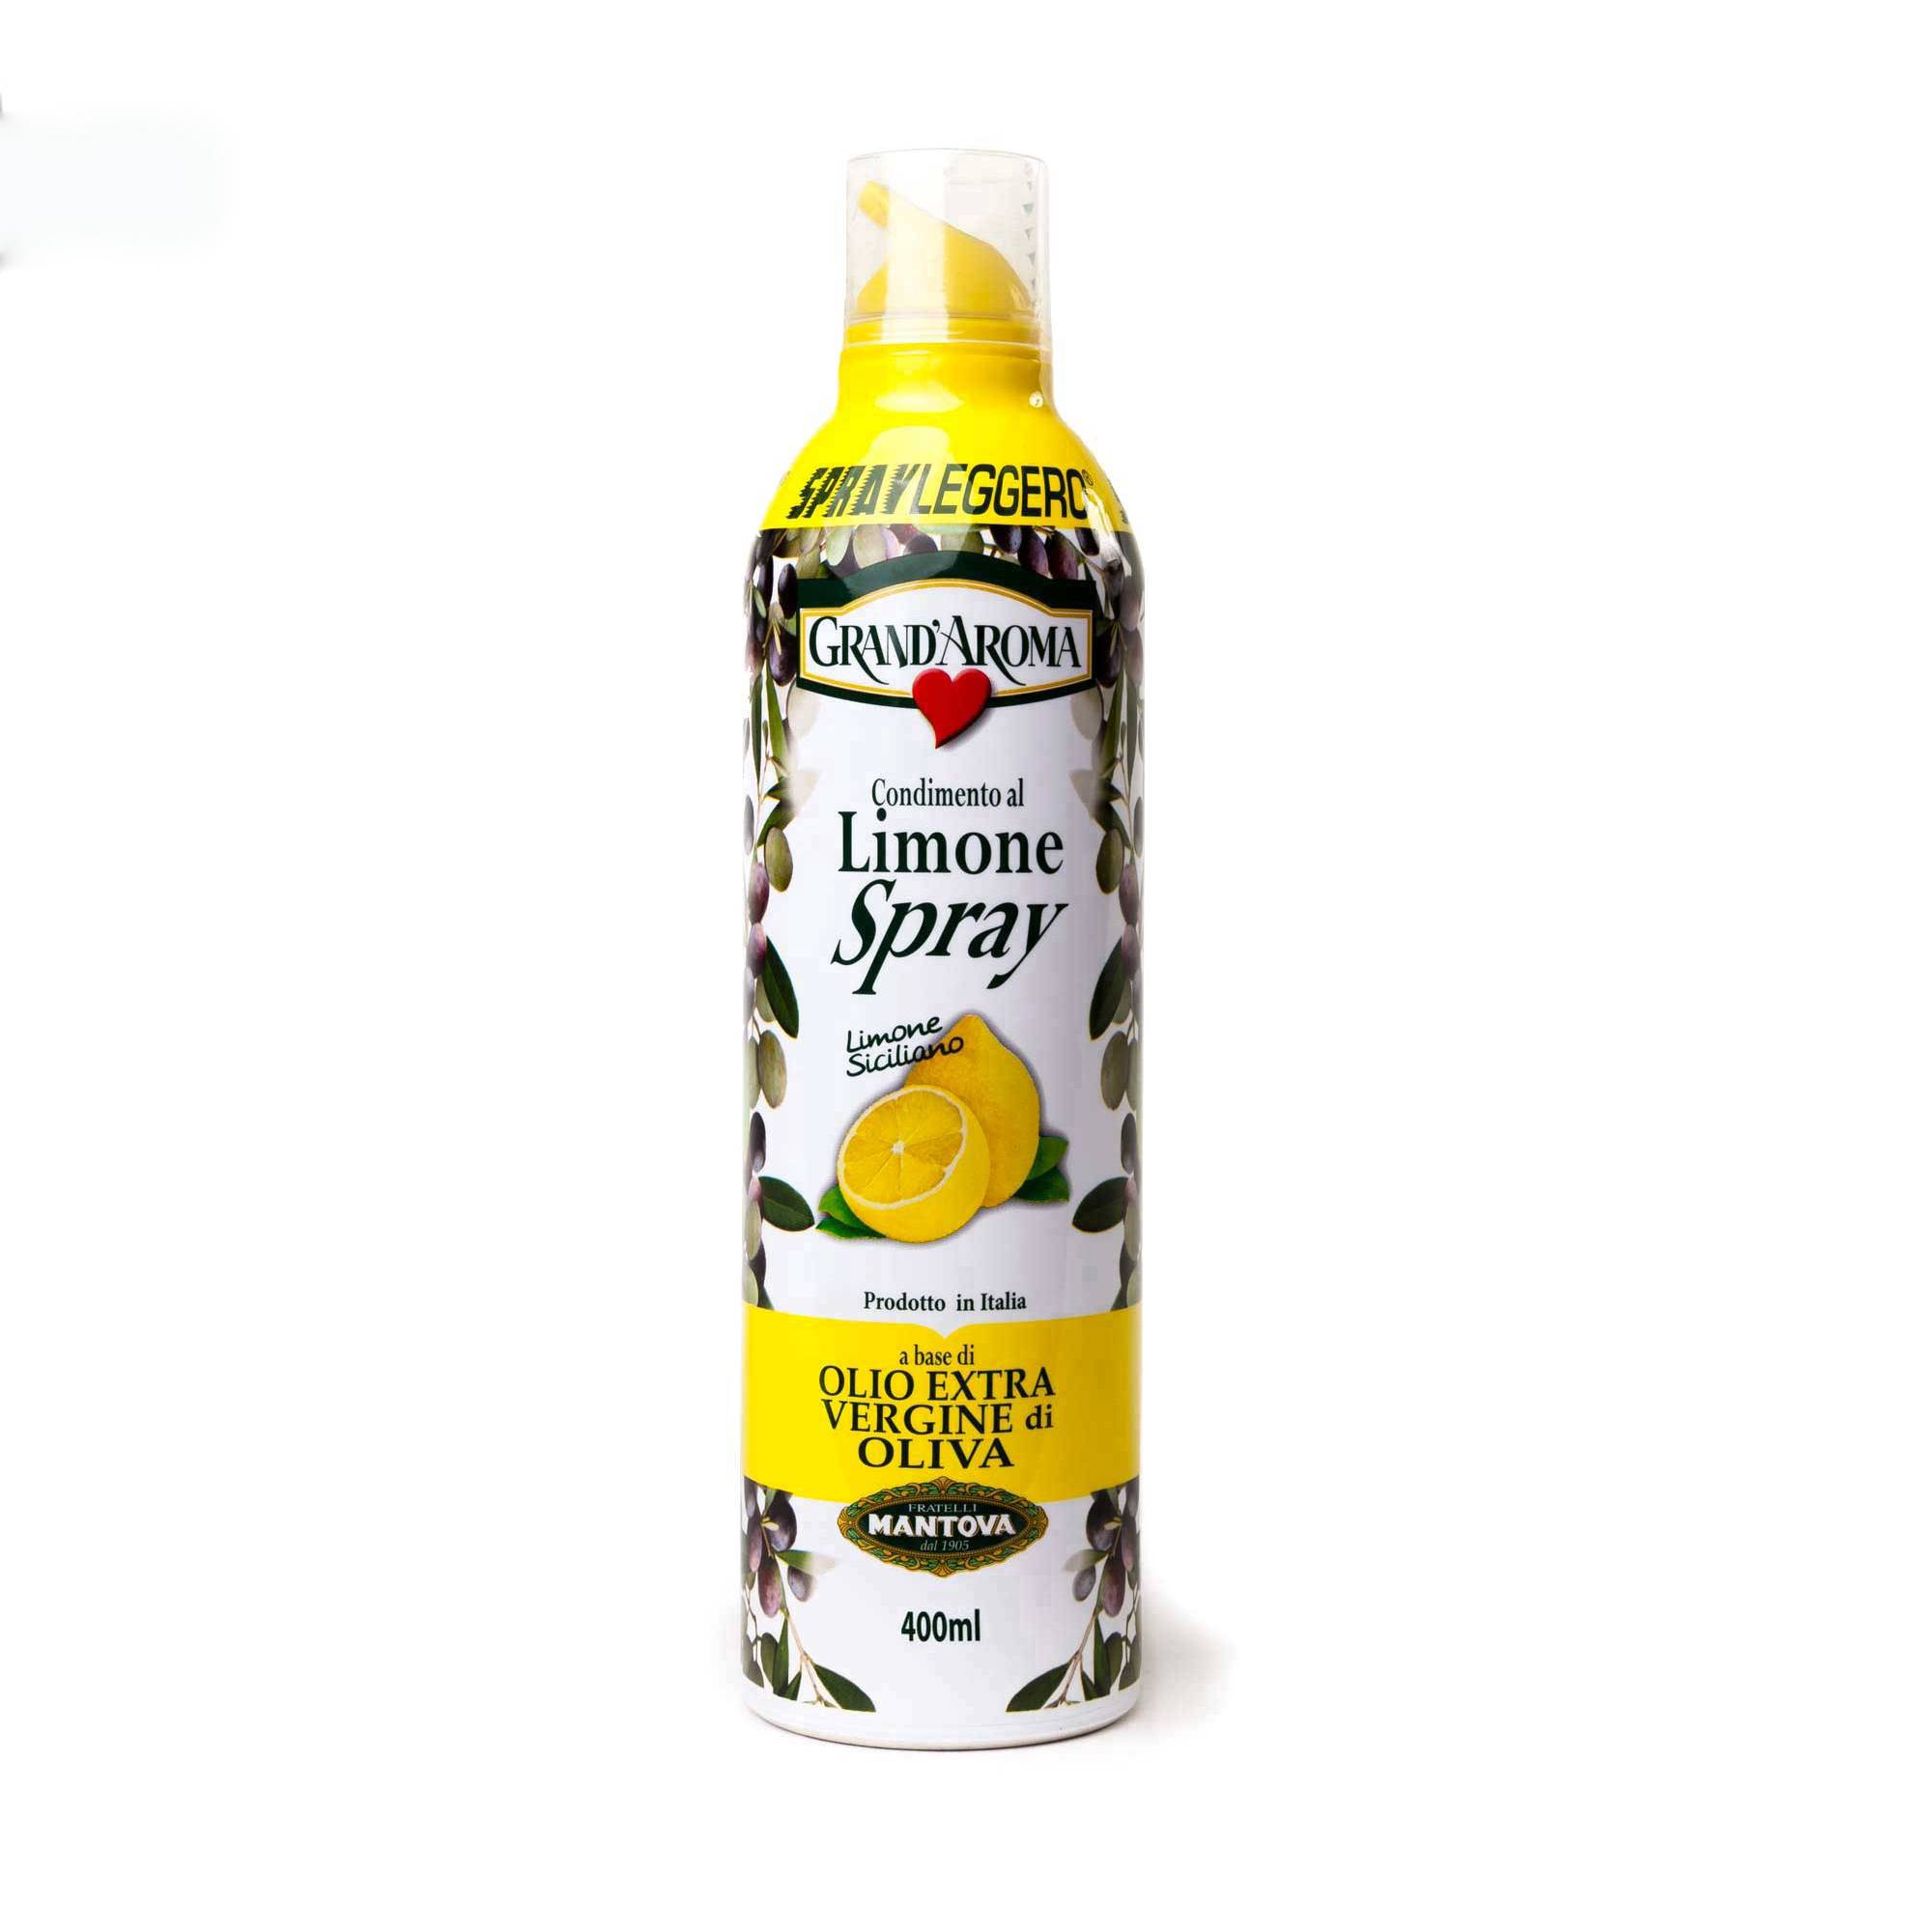 Спрей оливкового масла и лимона, 400ml image